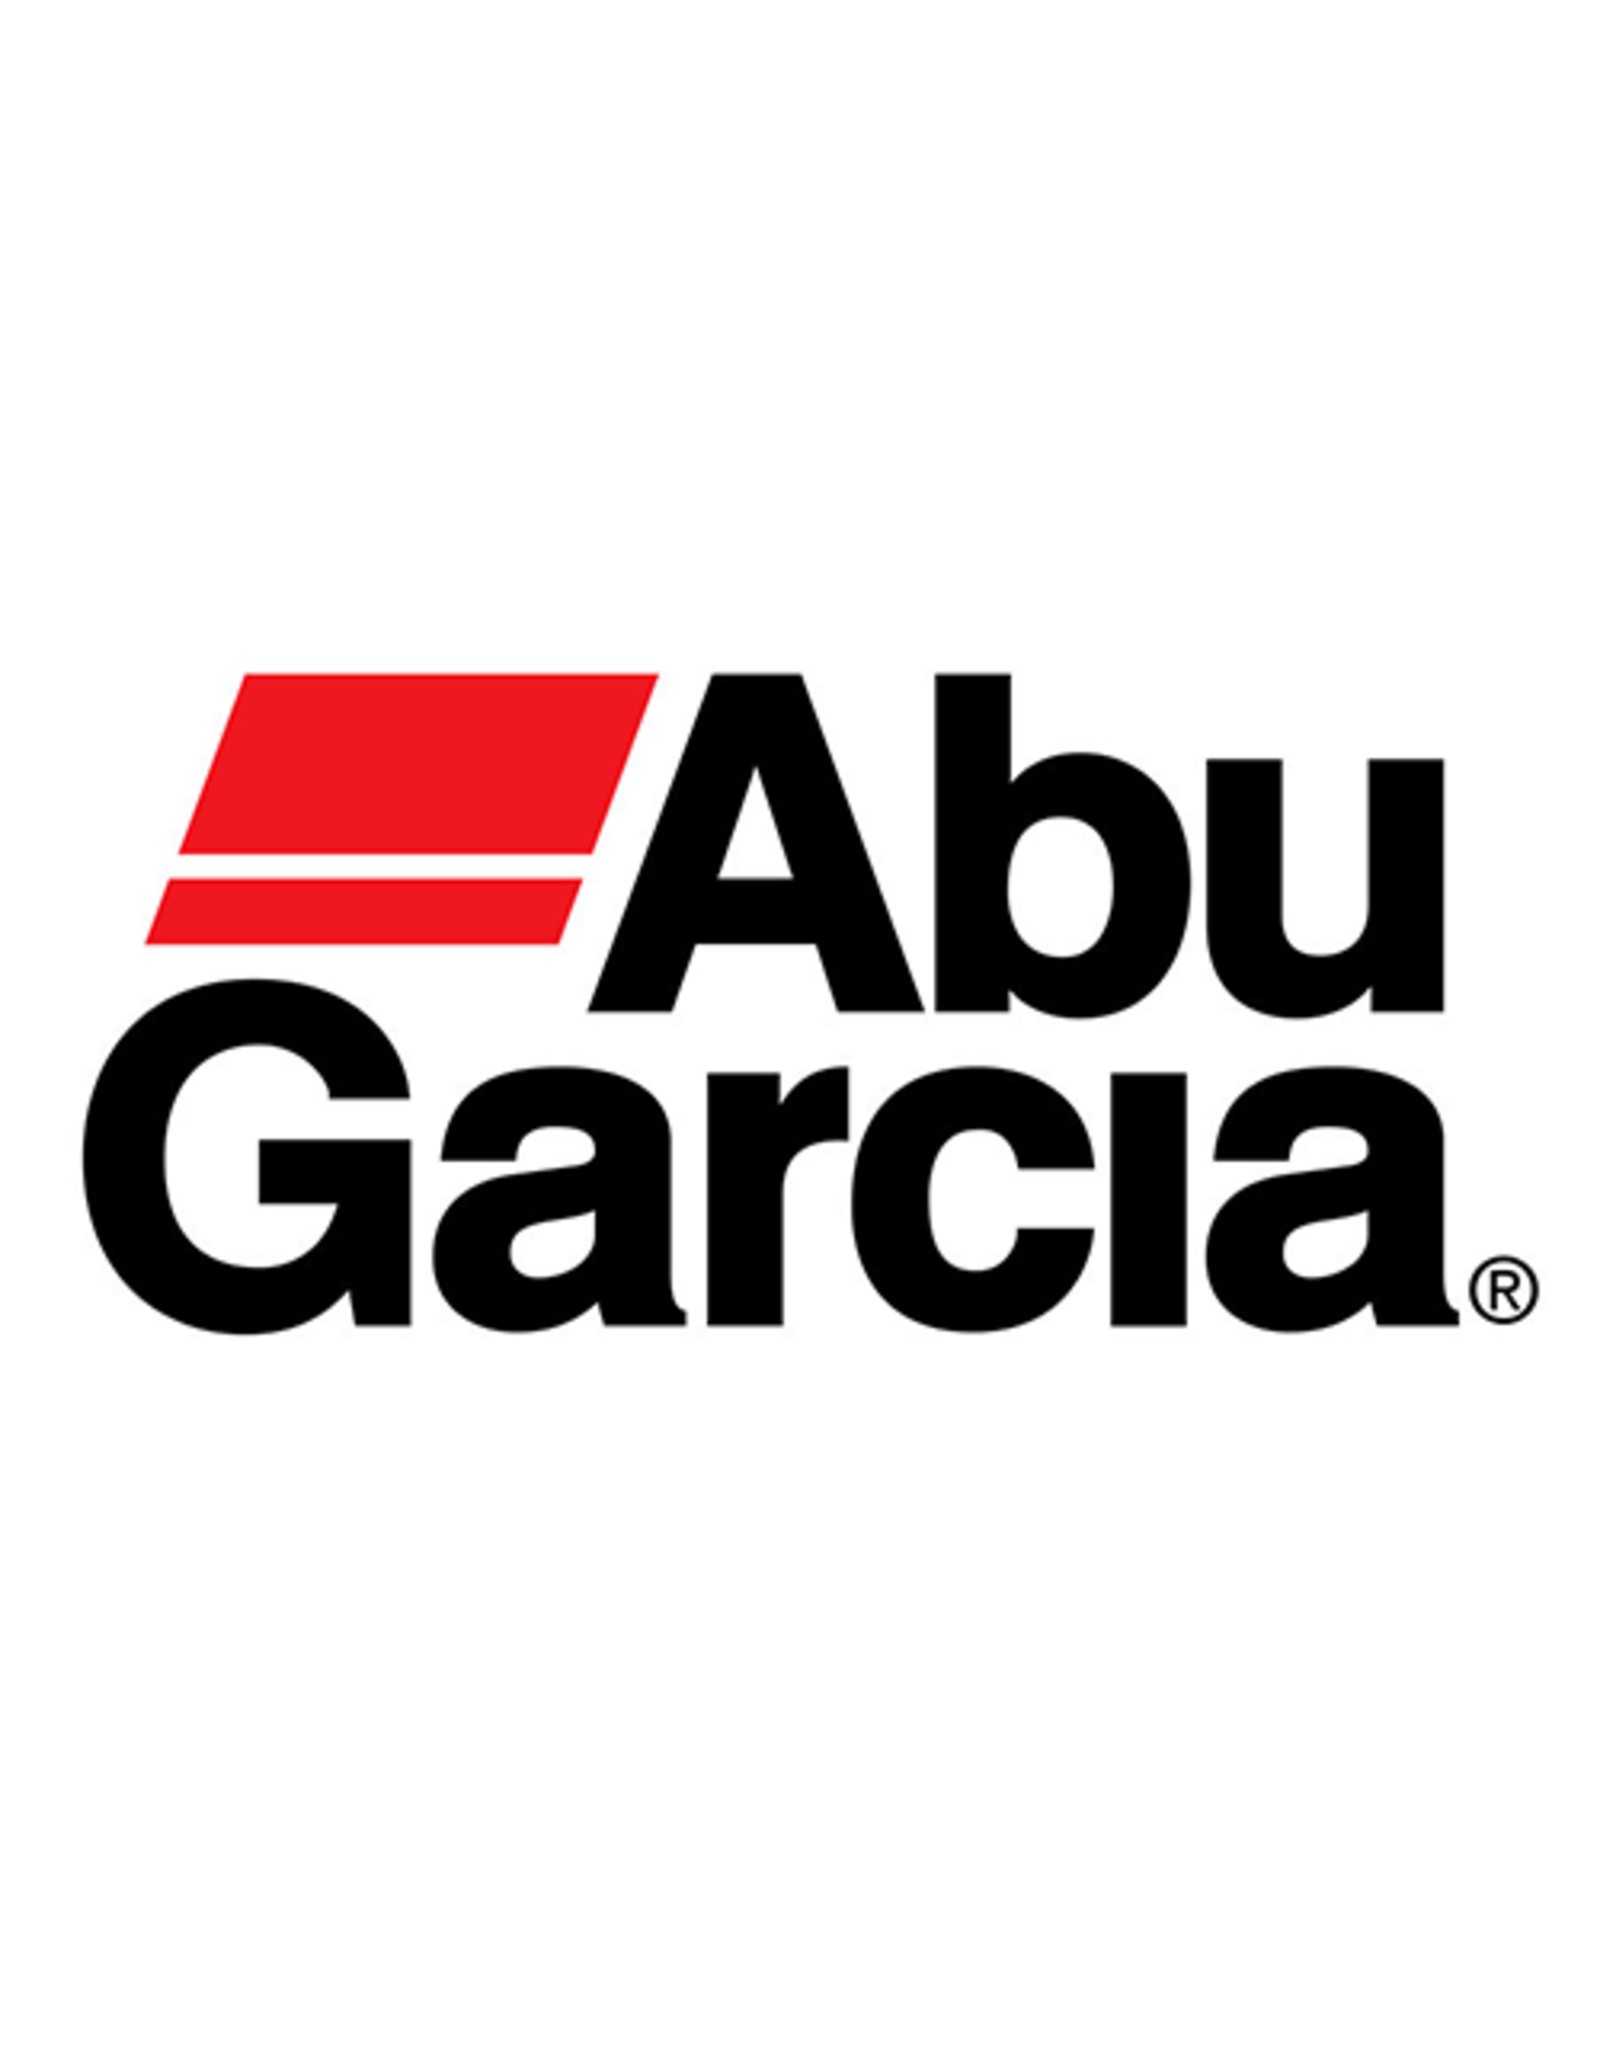 Abu Garcia 62820  BALL BEARING /NLA